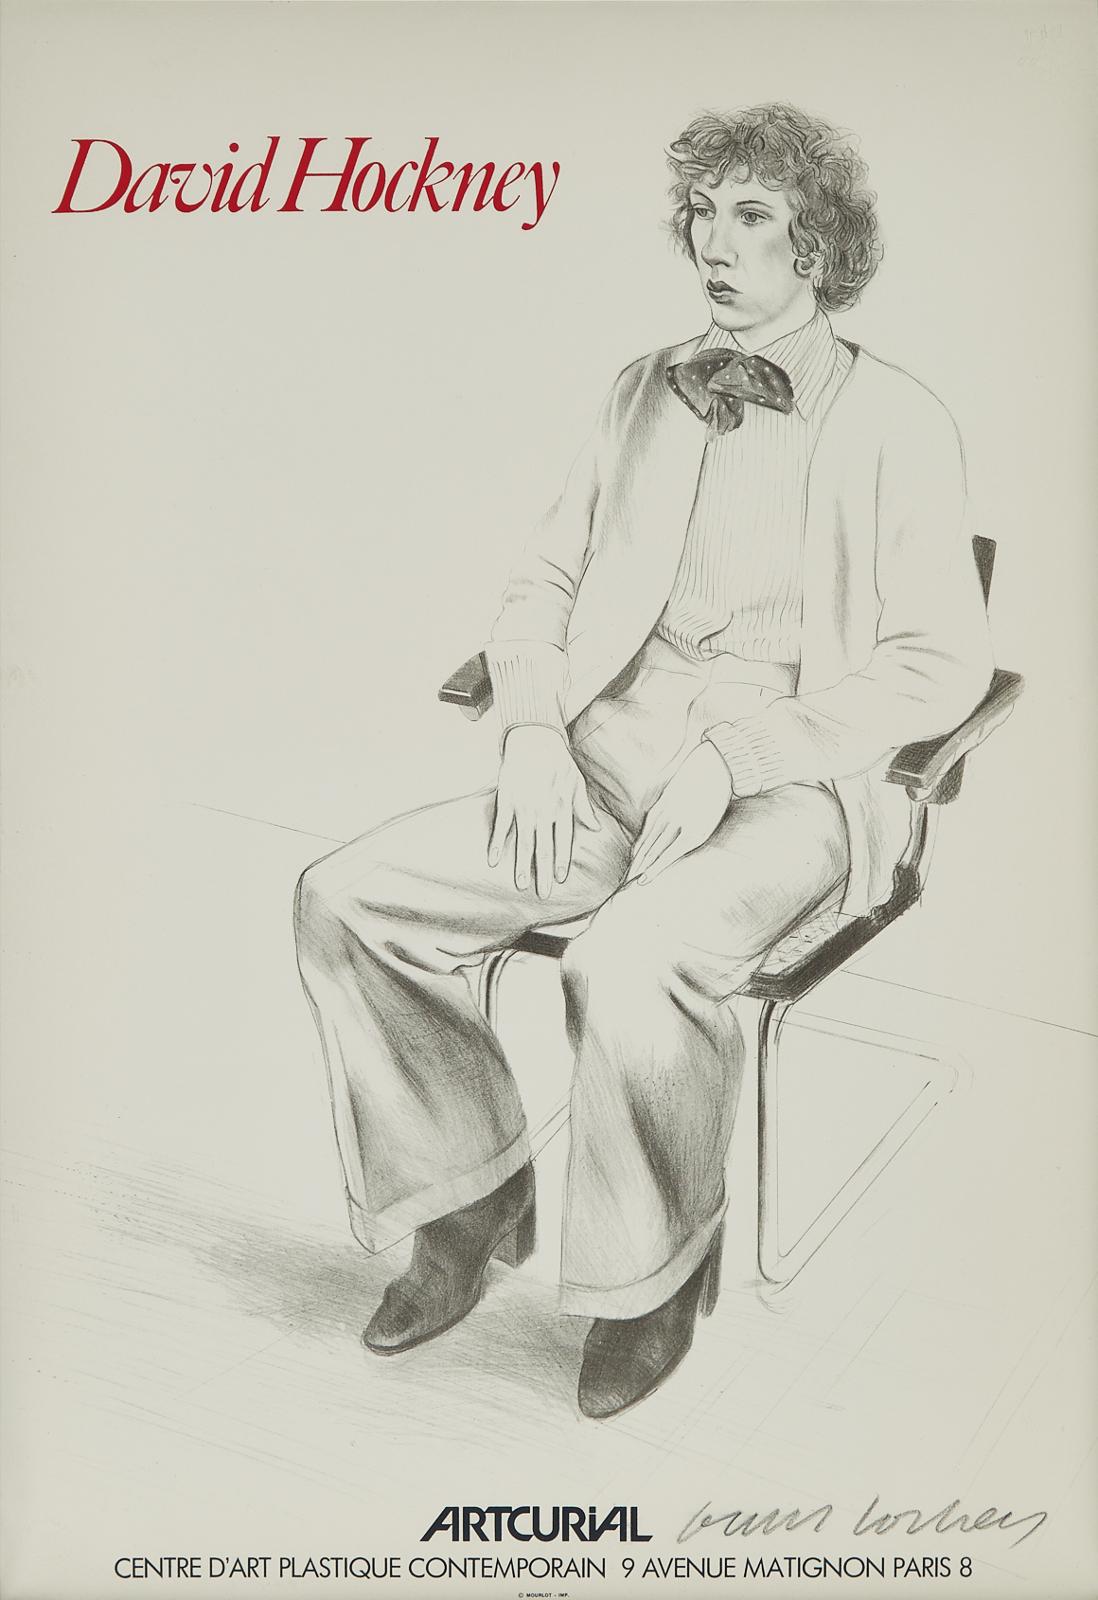 David Hockney (1937) - David Hockney, Artcurial, Paris 1979, Centre D'art Plastique Contemporain [baggott, 57]